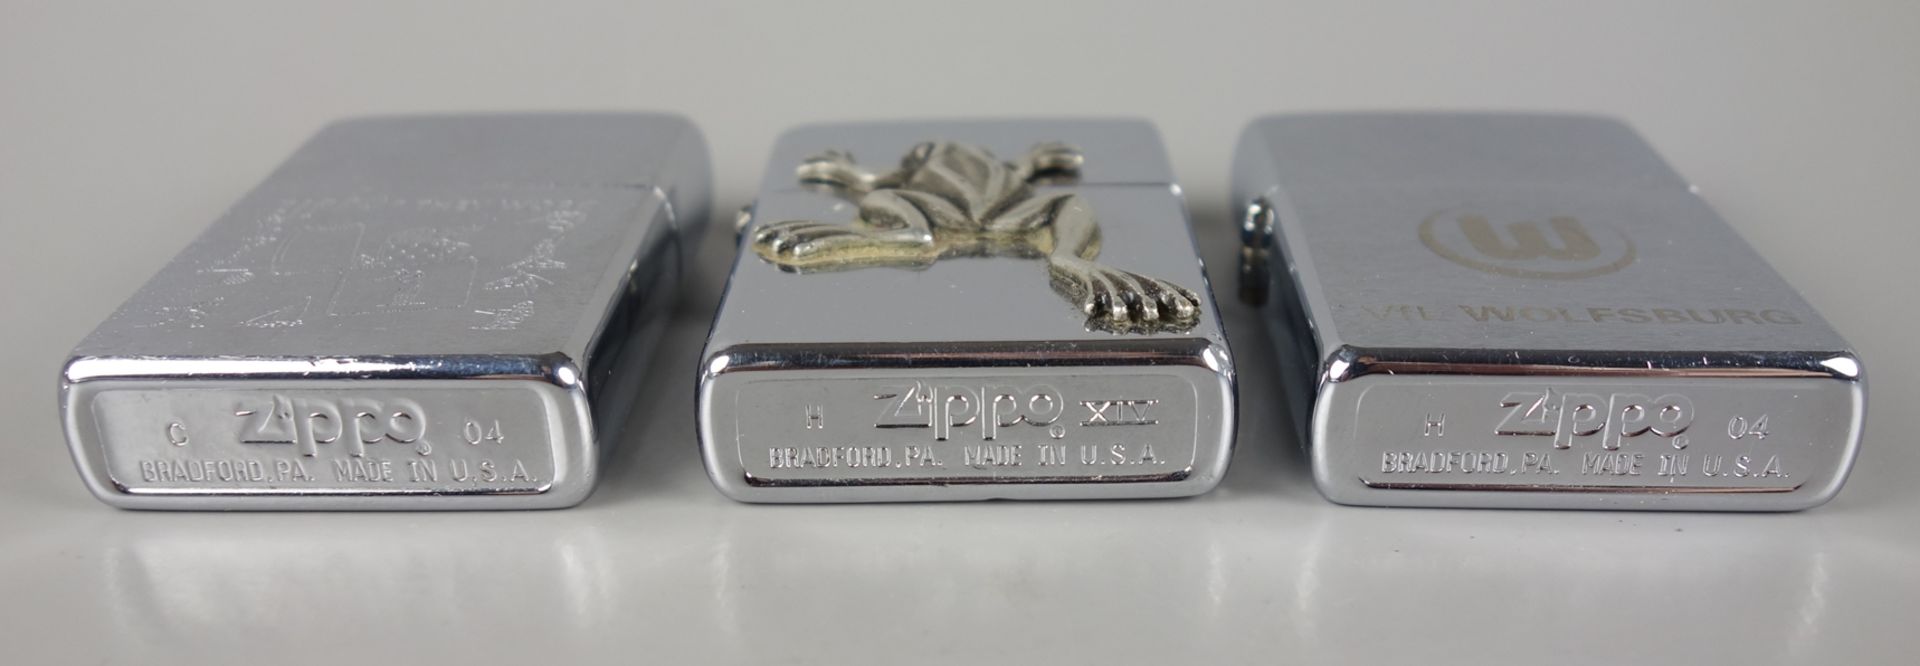 3 lighters, Zippo, USA, 2nd half 20th c. - Image 2 of 2